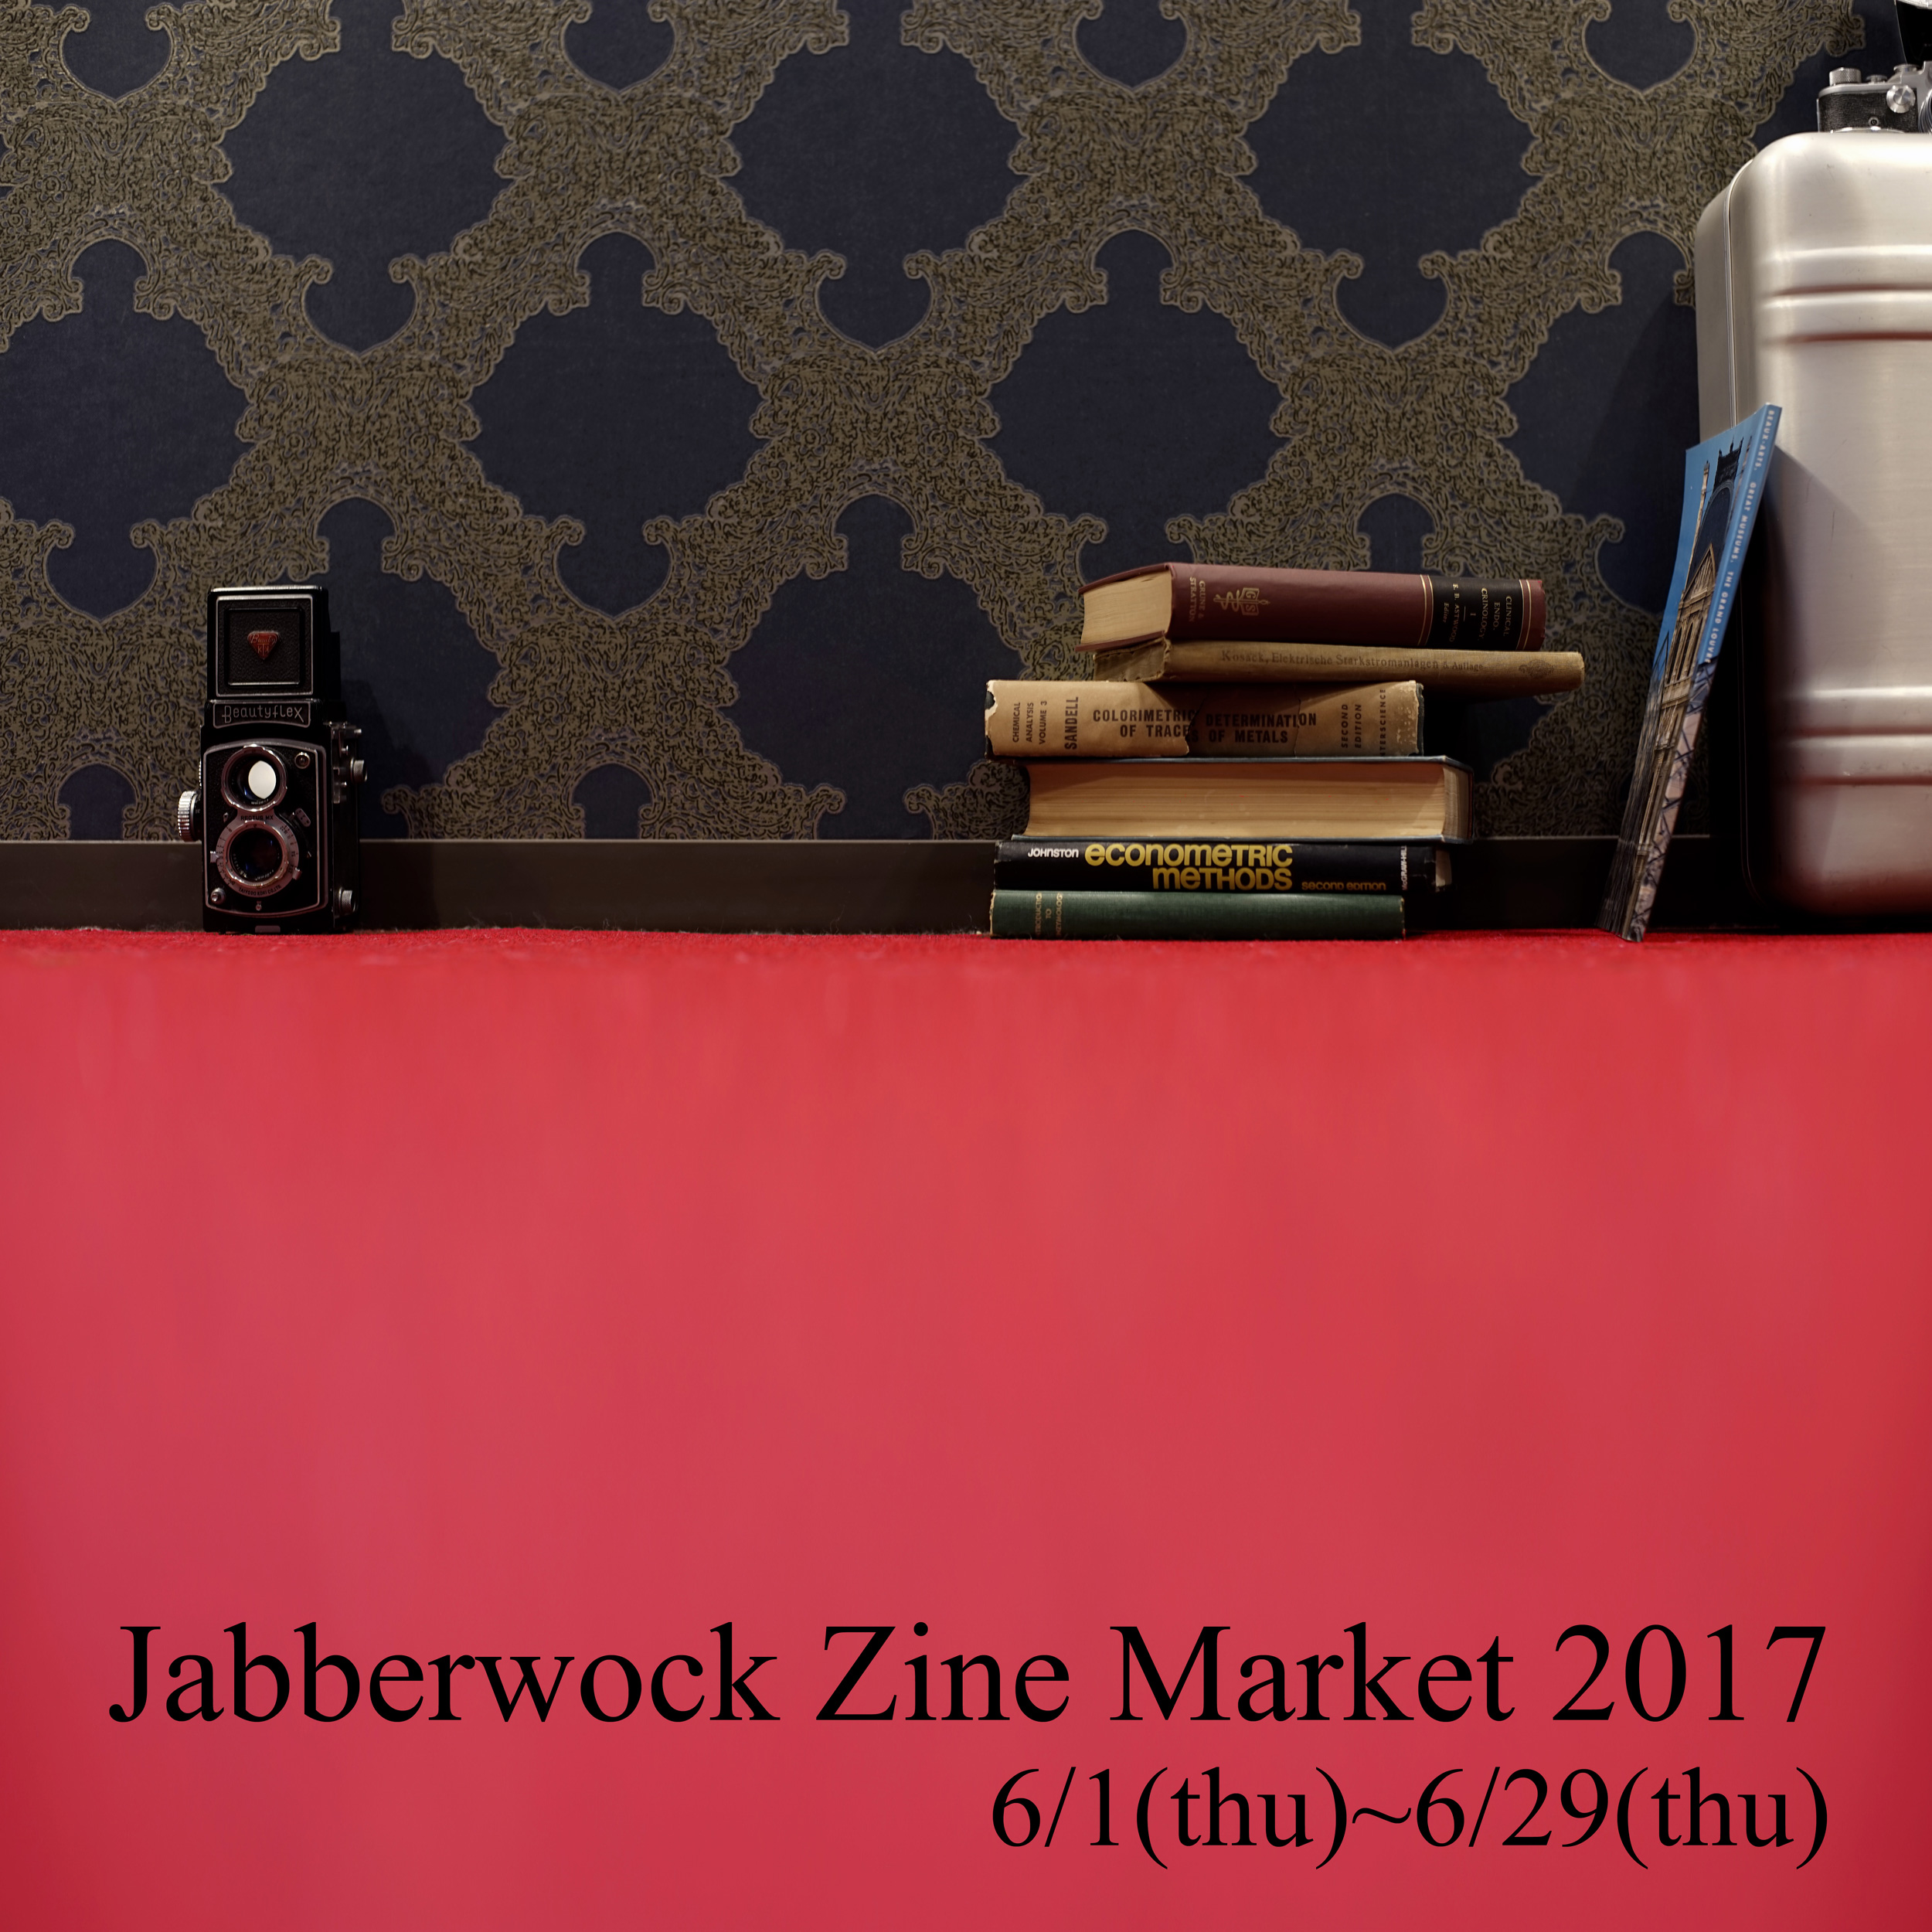 Jabberwock Zine Market 2017